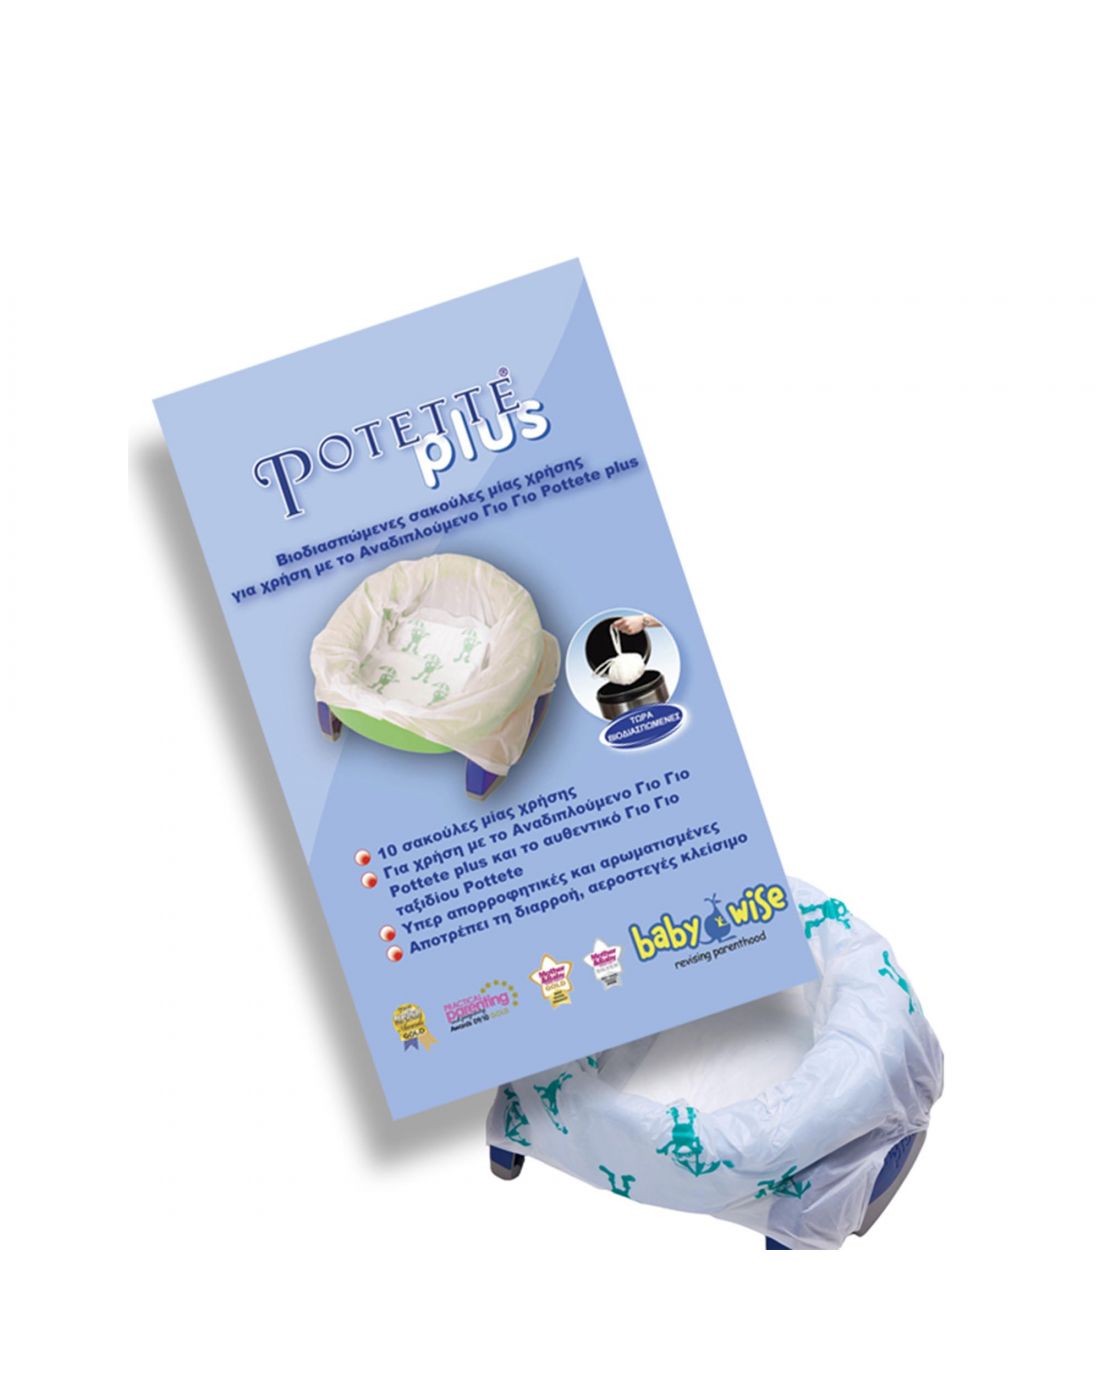 Babywise Potette Plus Biodegradable Refill Bags (10pcs)